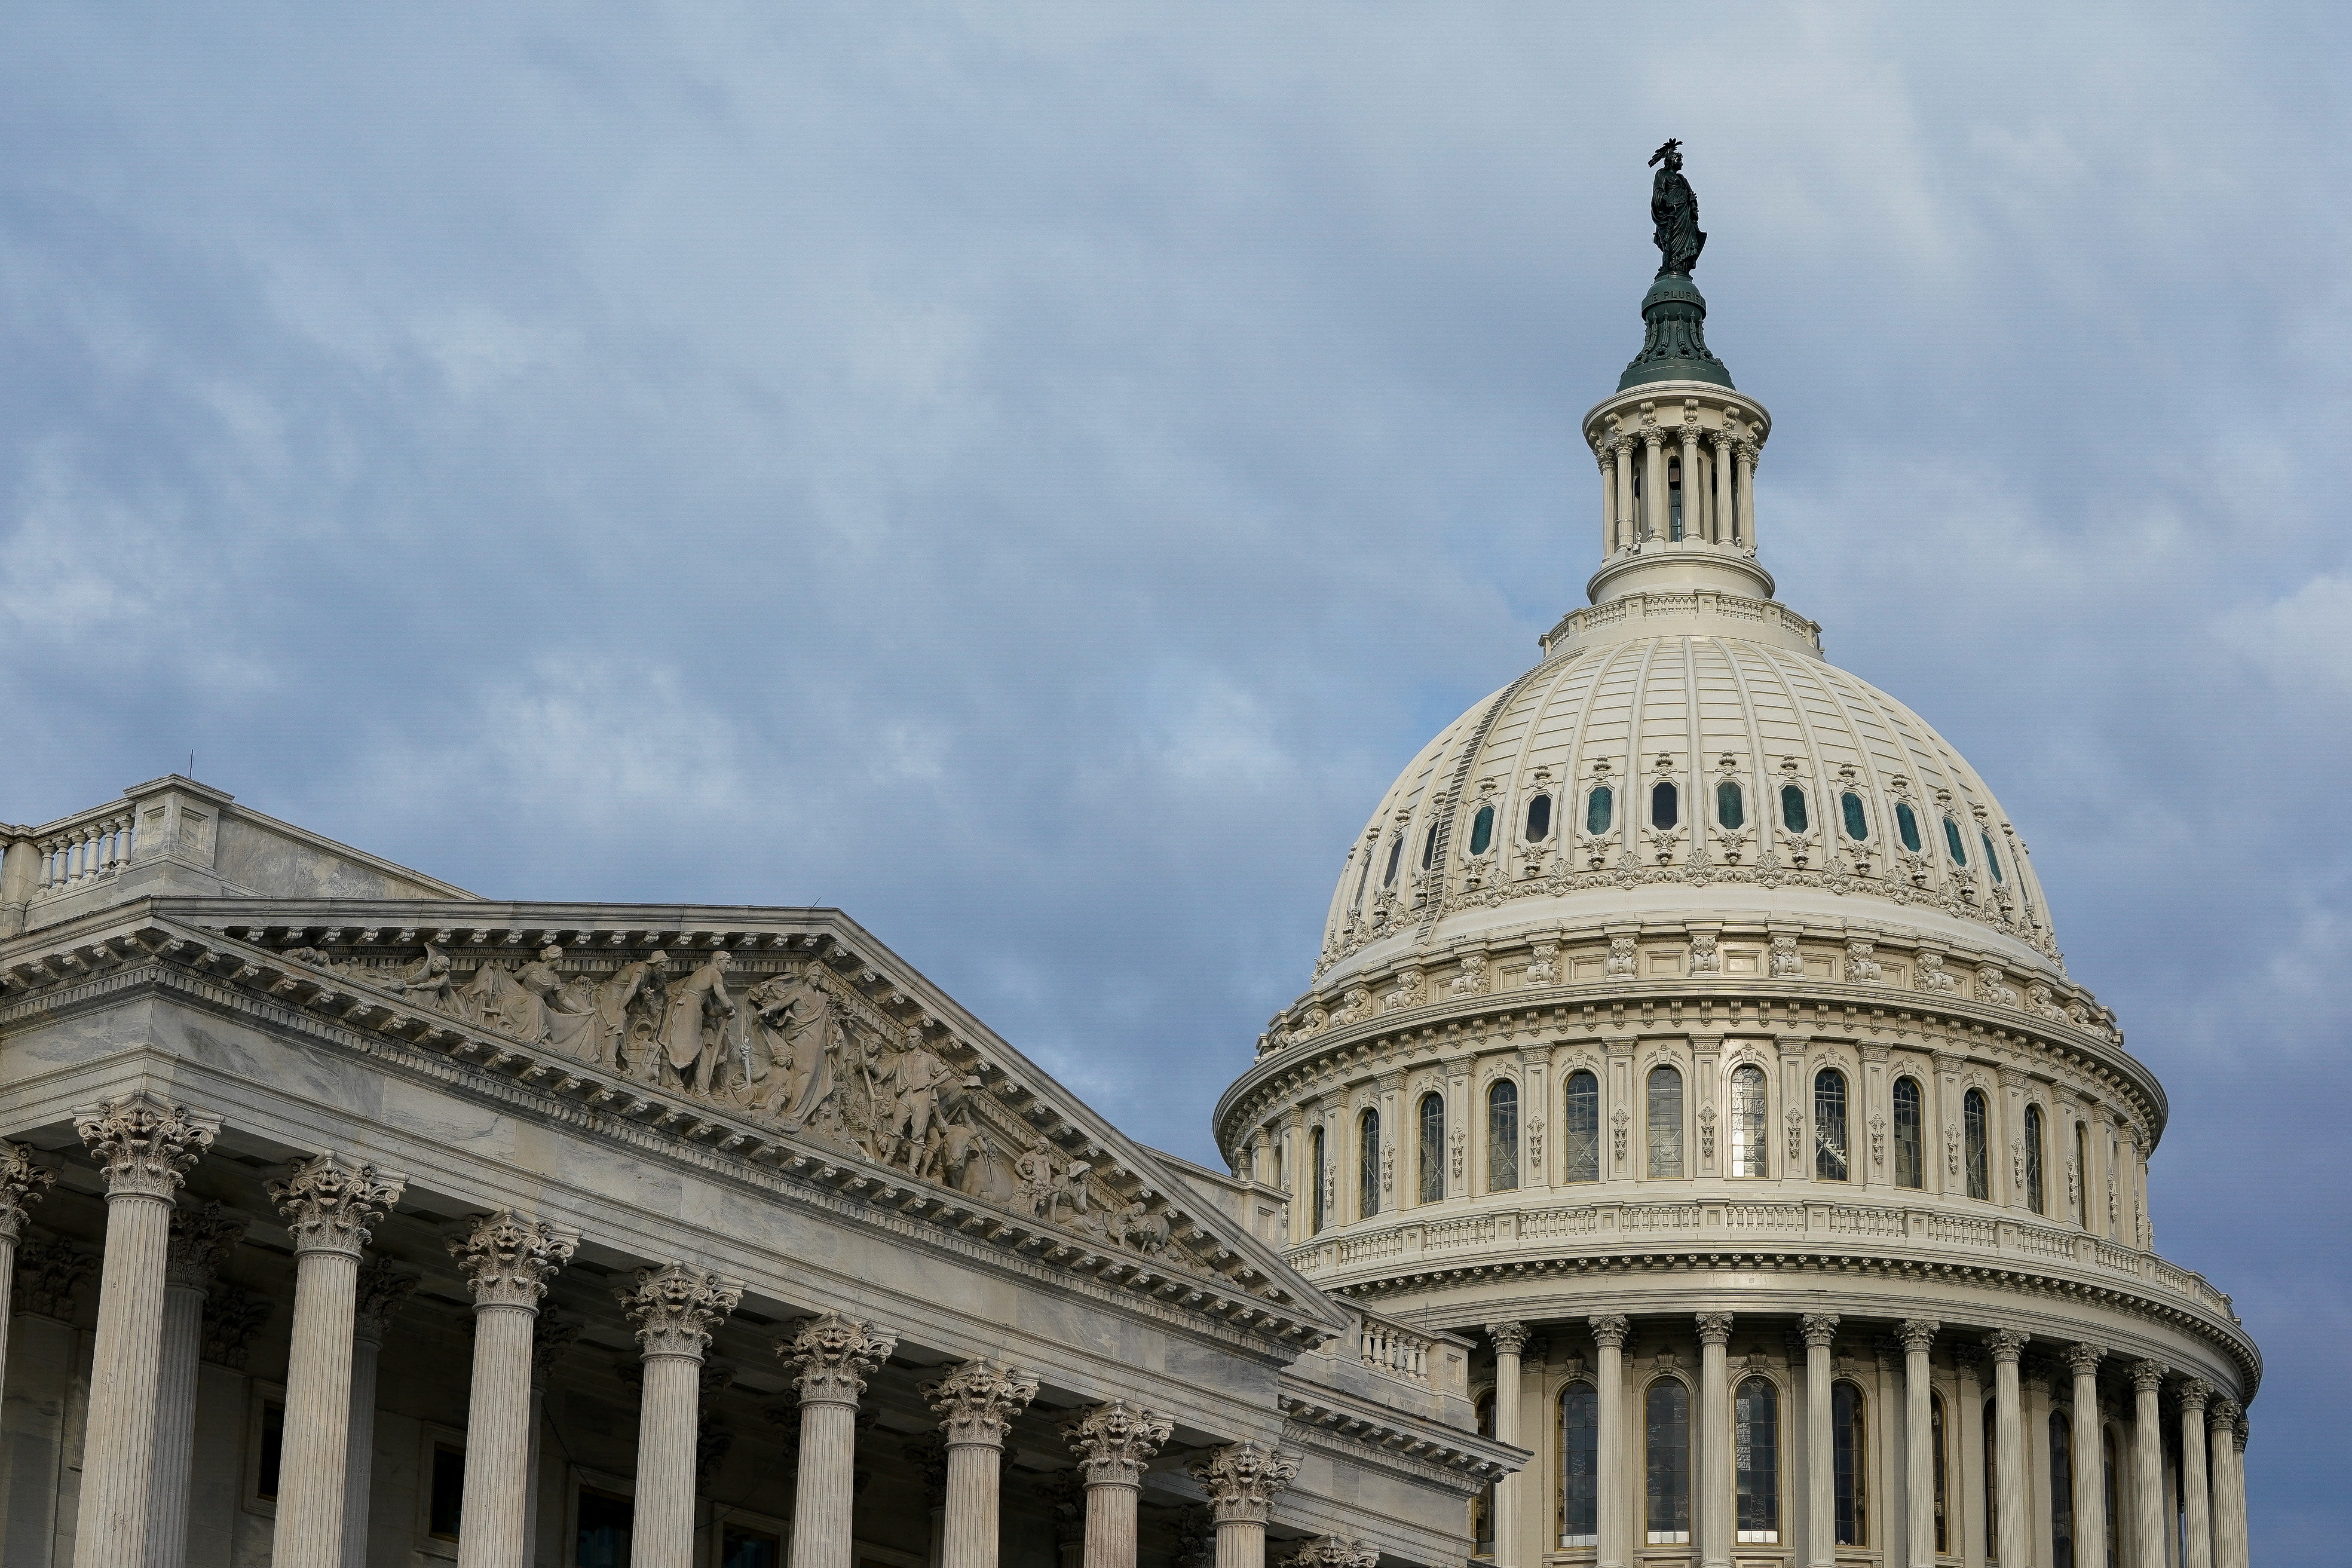 Washington Today (12-6-23): Senate GOP blocks Ukraine aid, saying more U.S. border security needed